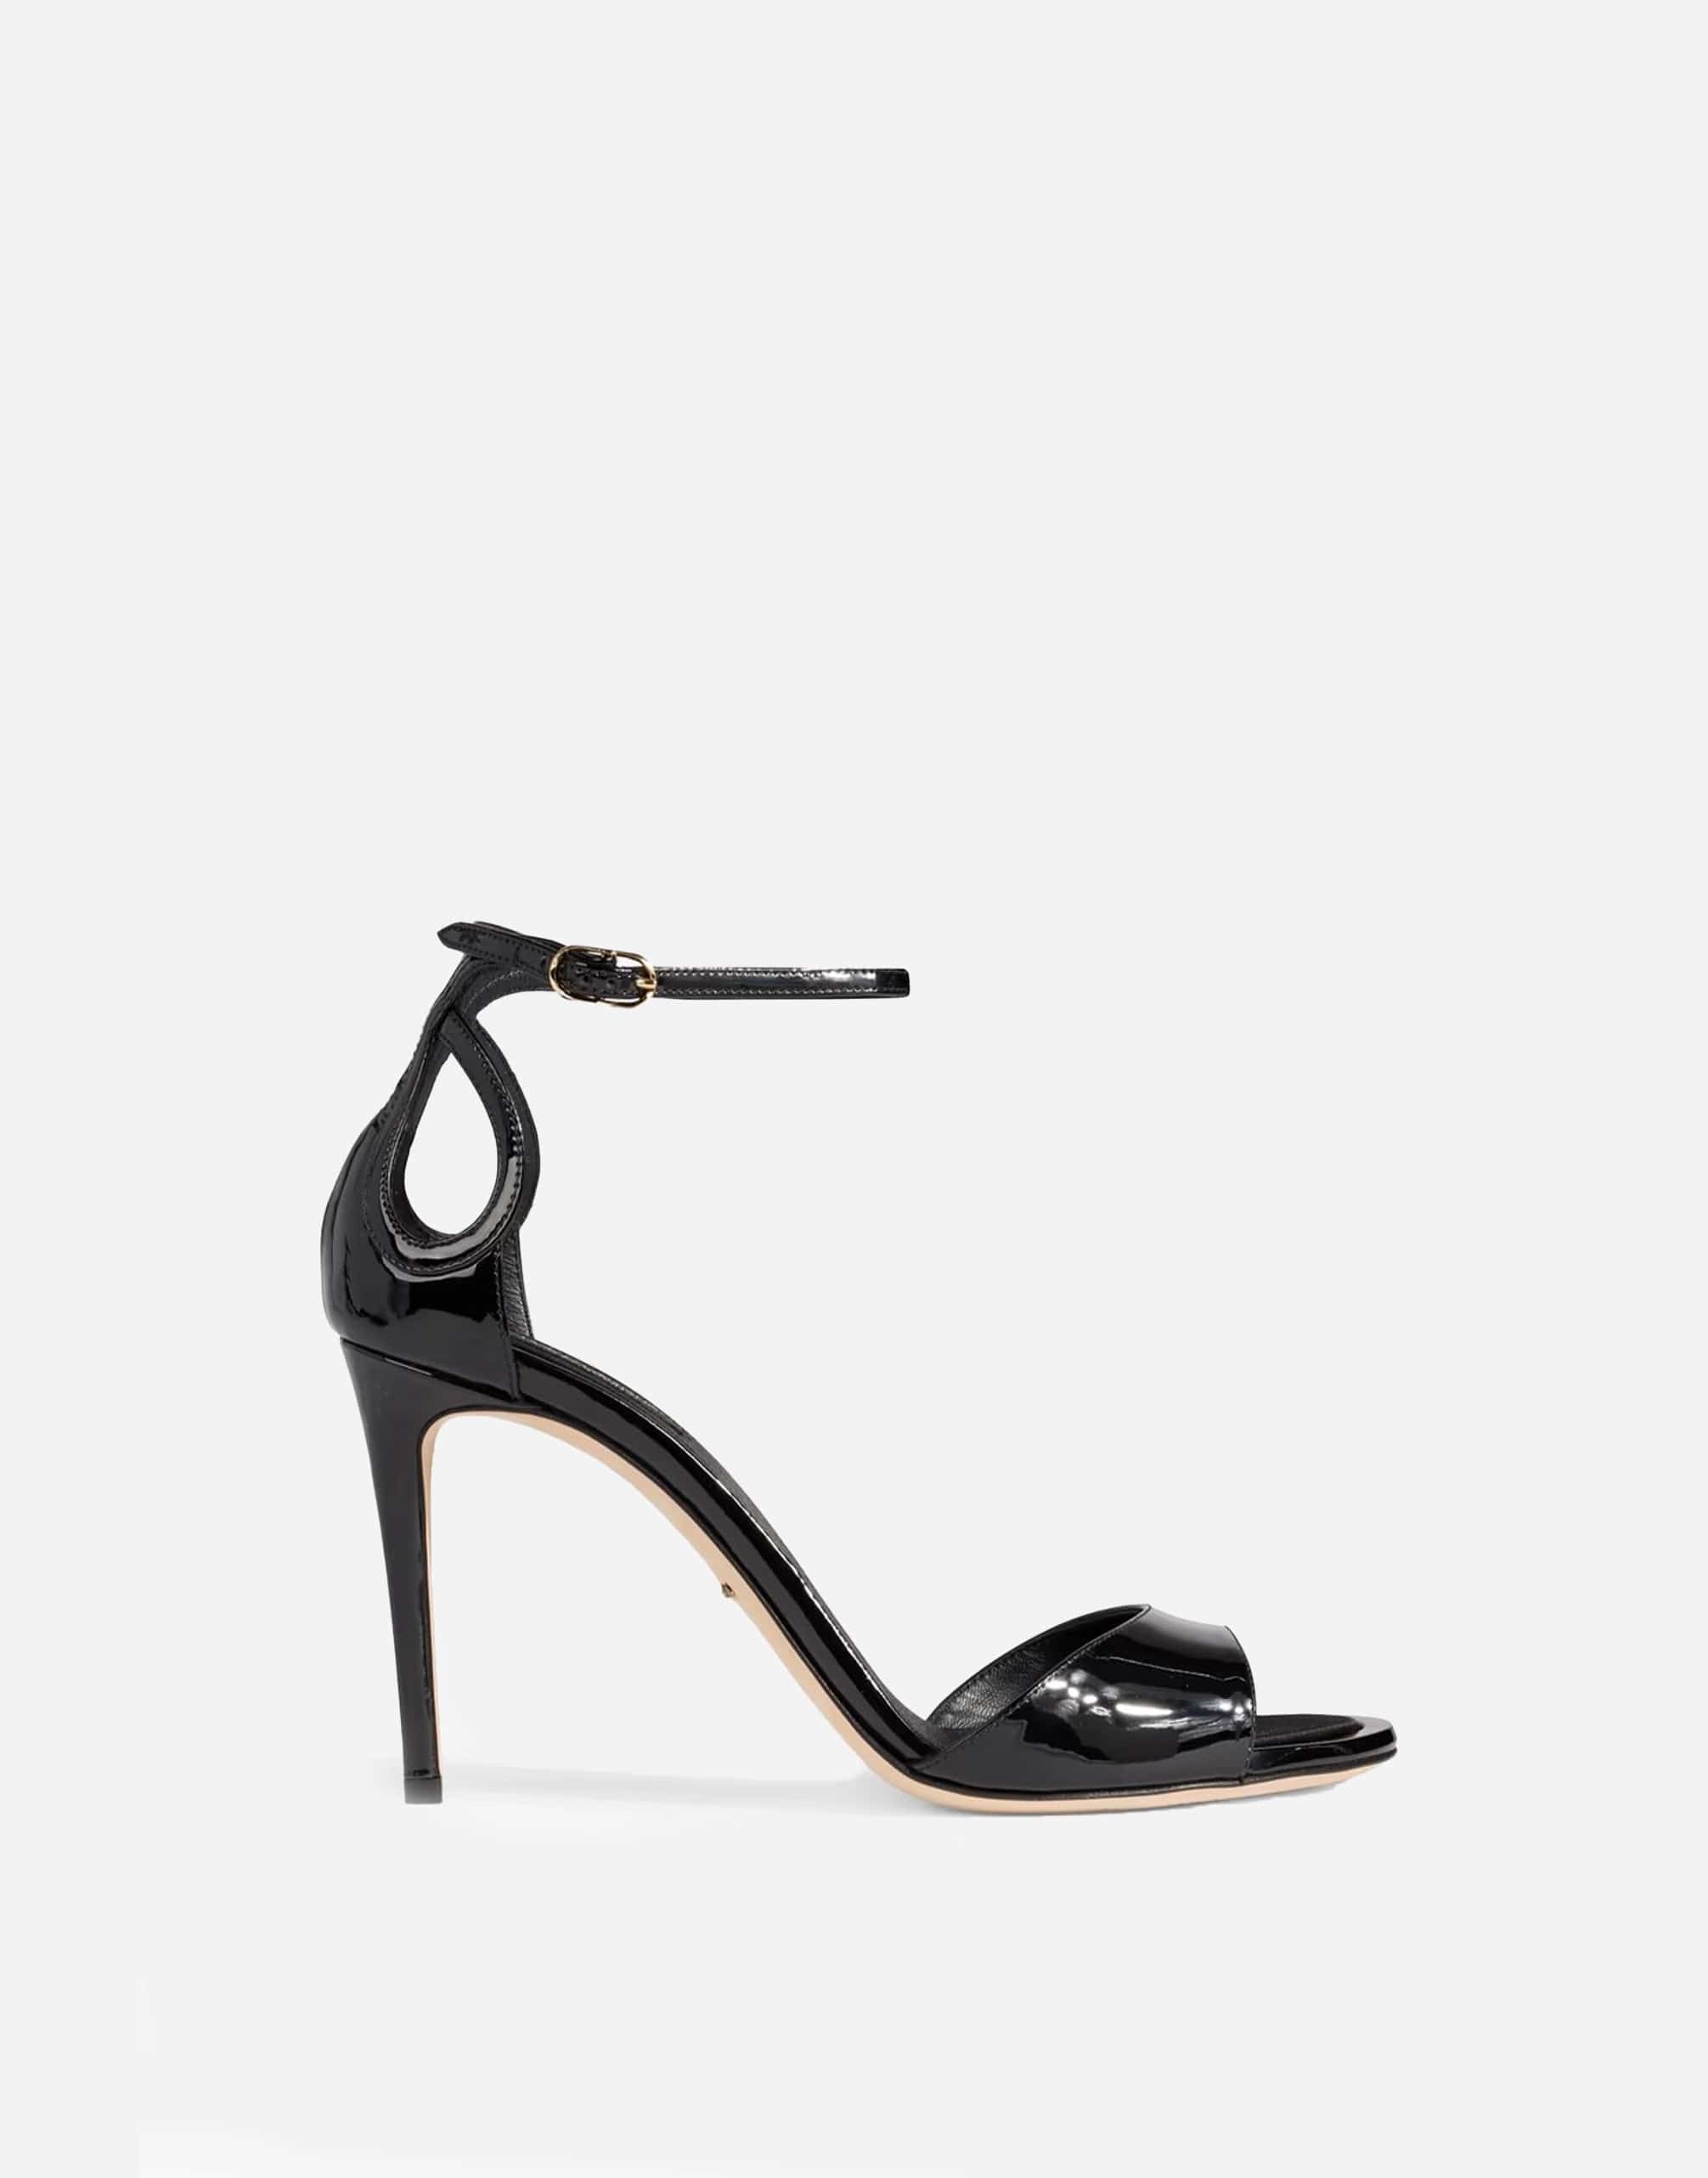 Dolce & Gabbana Patent-Leather Sandals